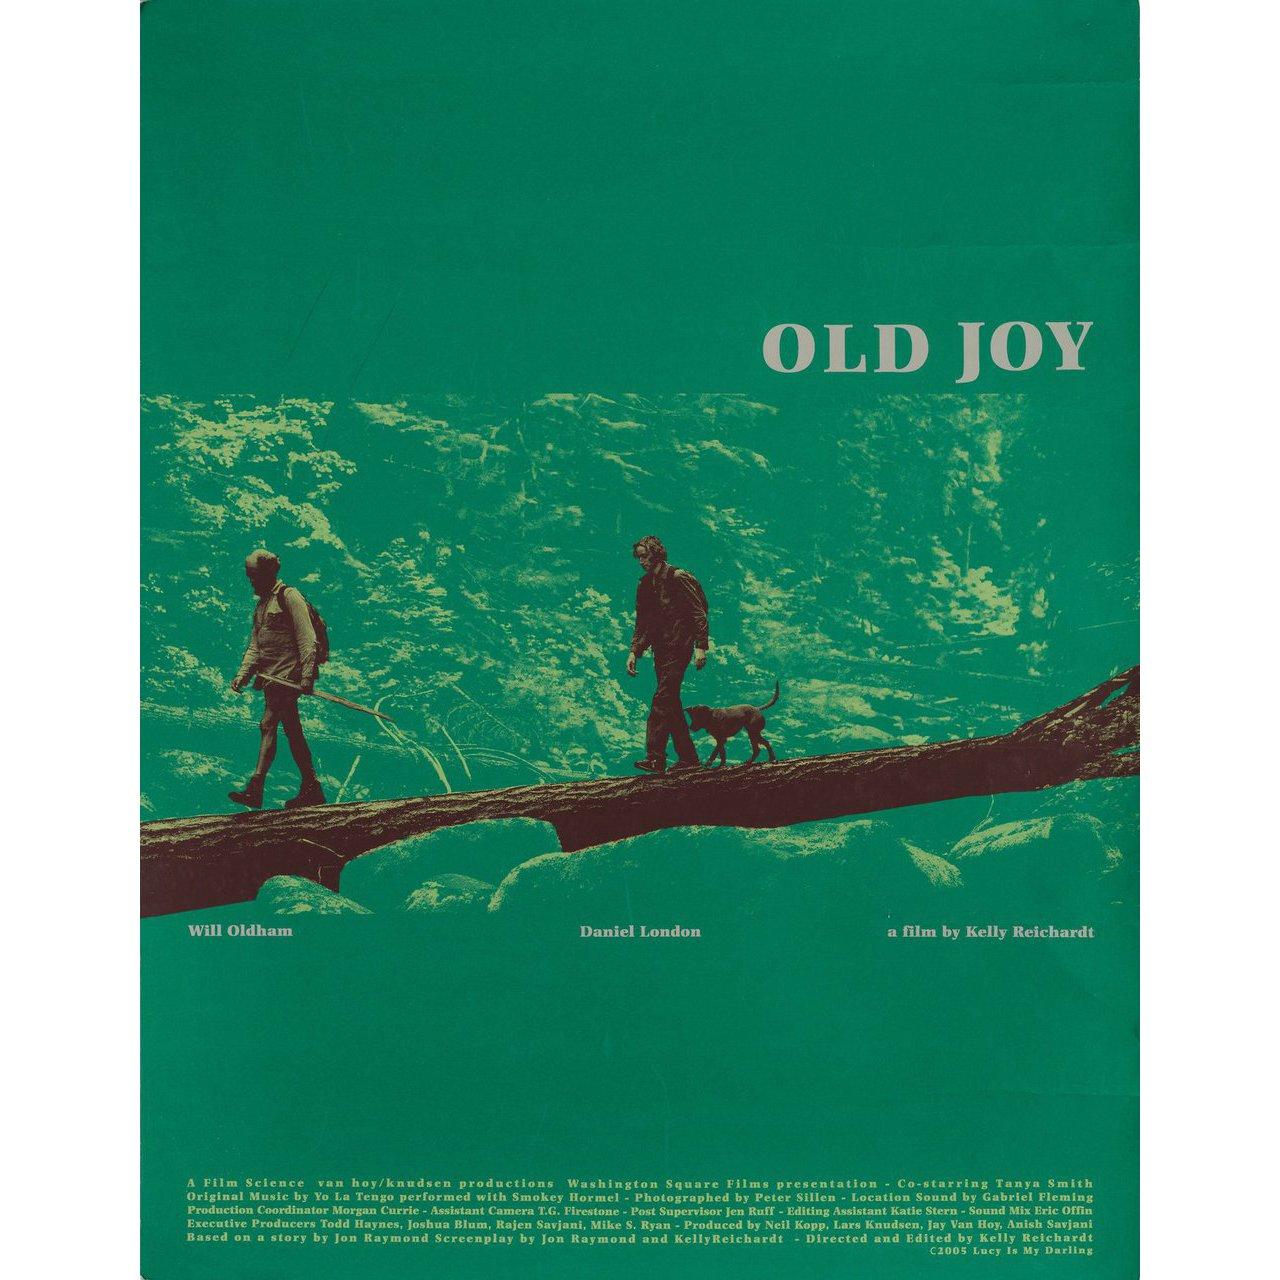 American Old Joy 2006 U.S. Film Poster